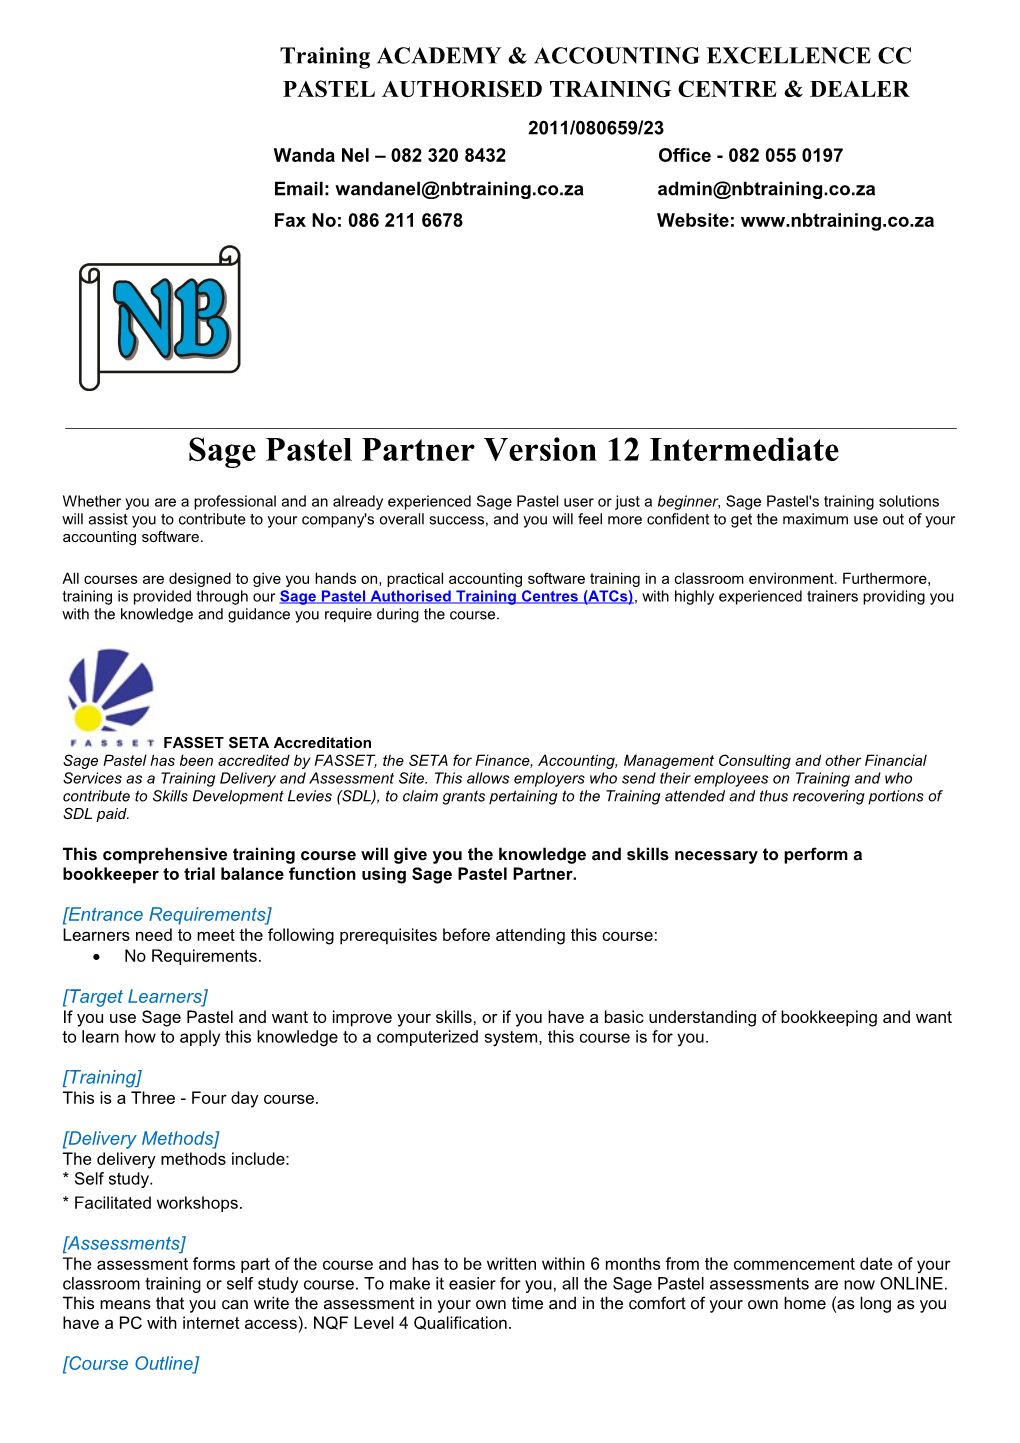 Sage Pastel Partner Version 12 Intermediate